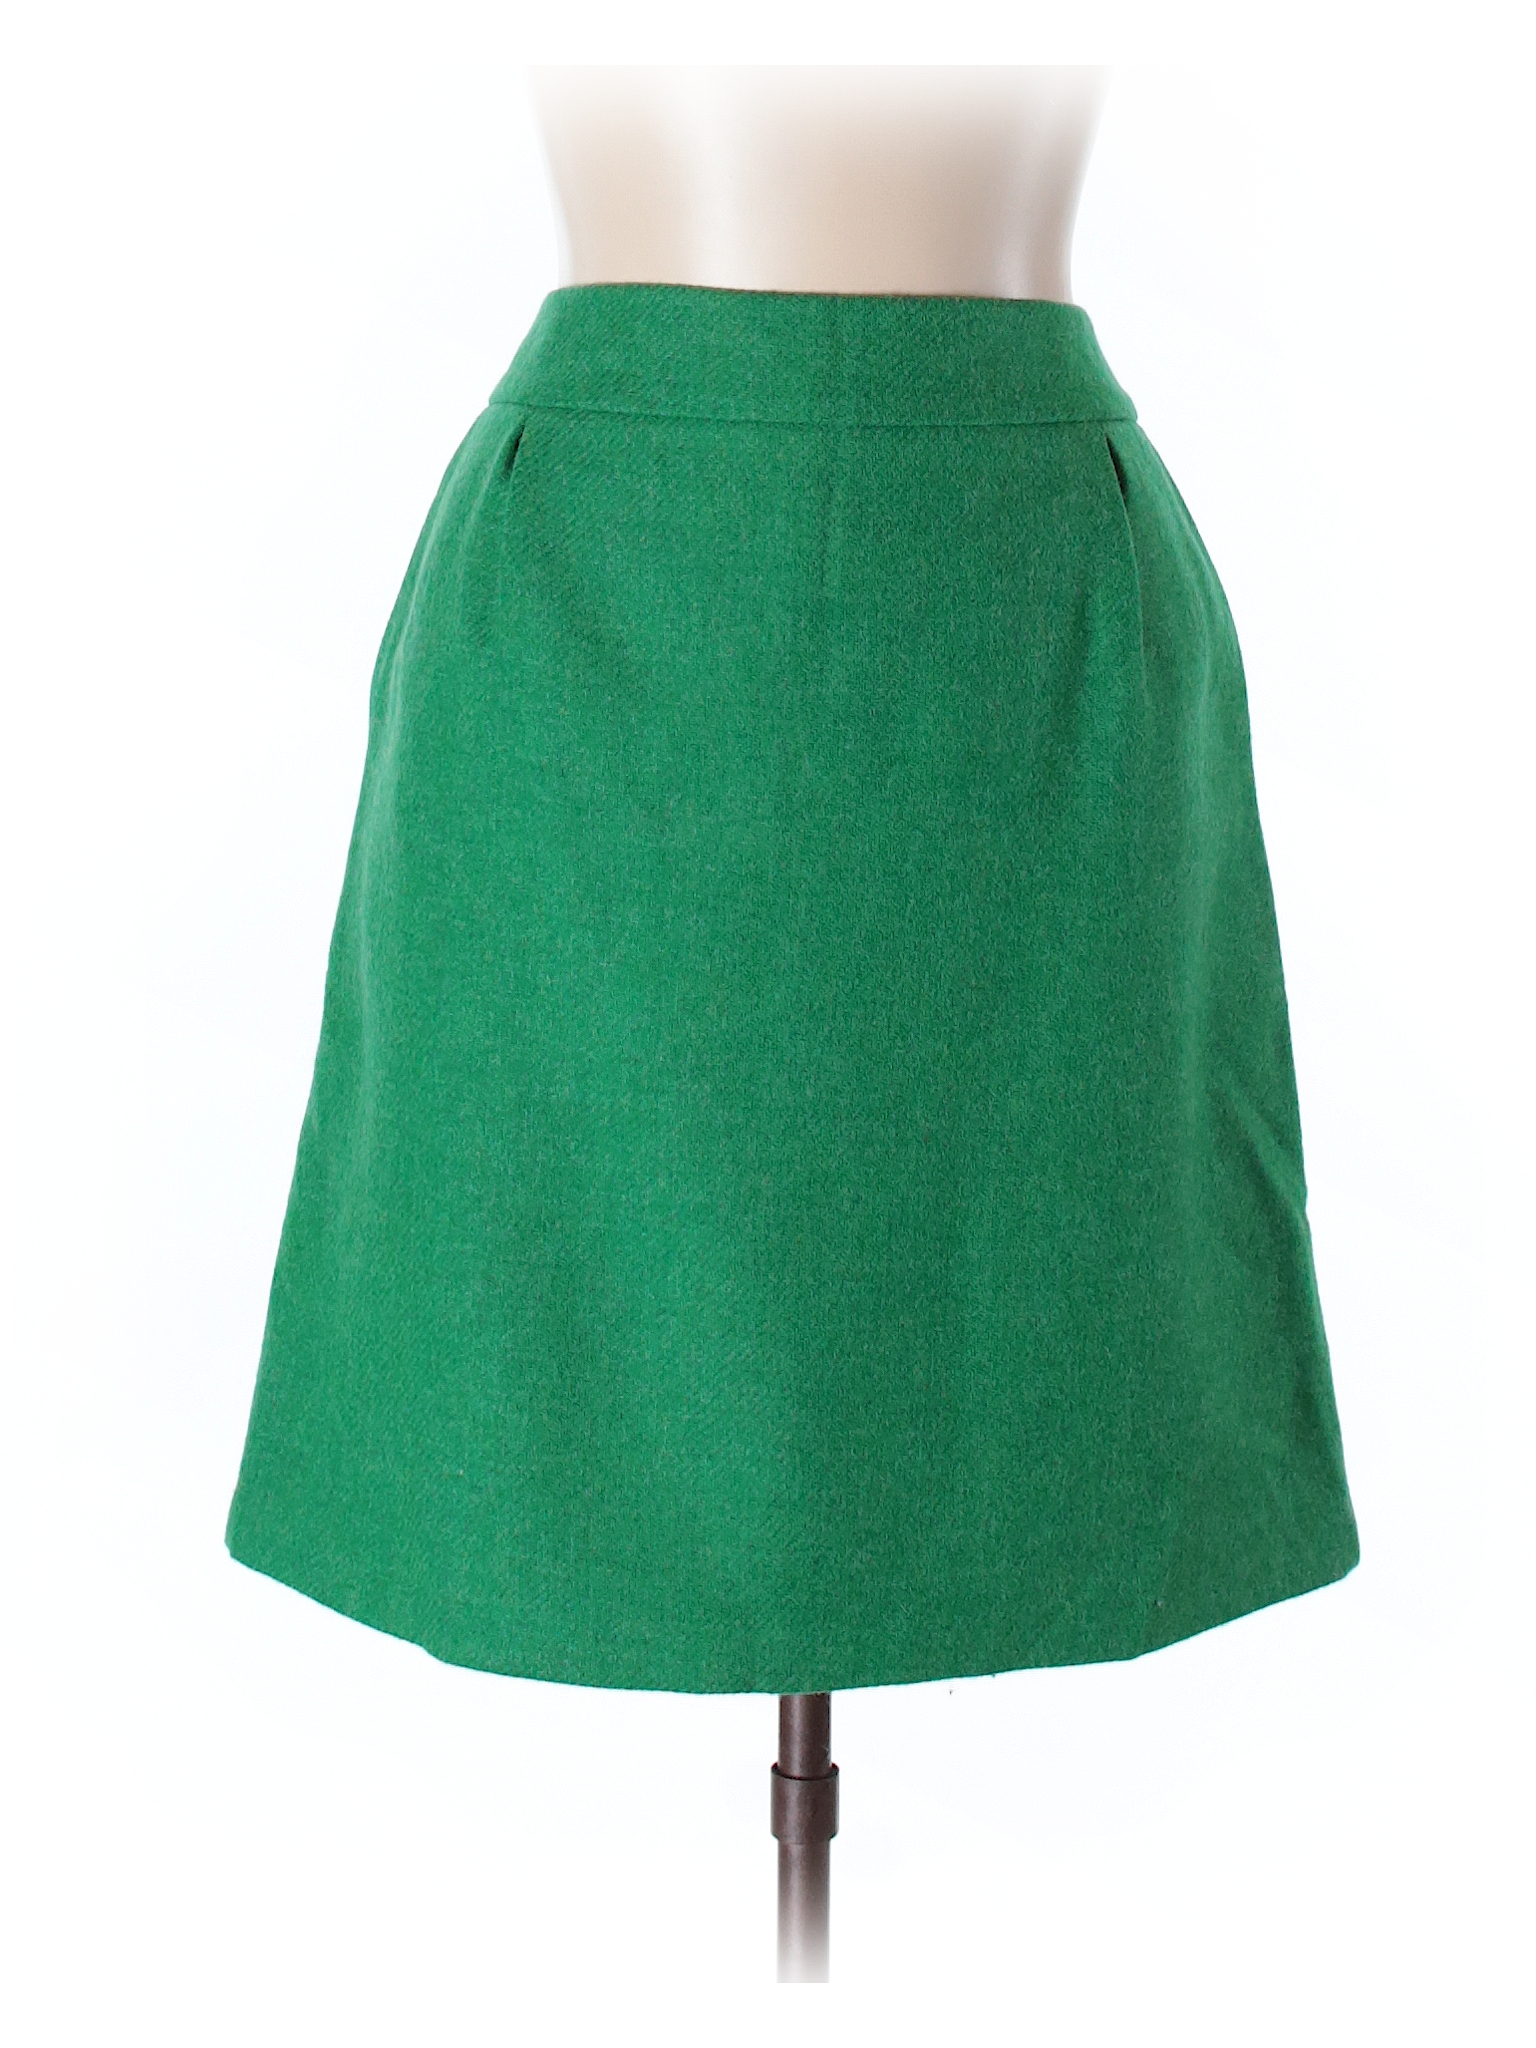 Boden 100% Wool Solid Dark Green Wool Skirt Size 10 - 75% off | thredUP